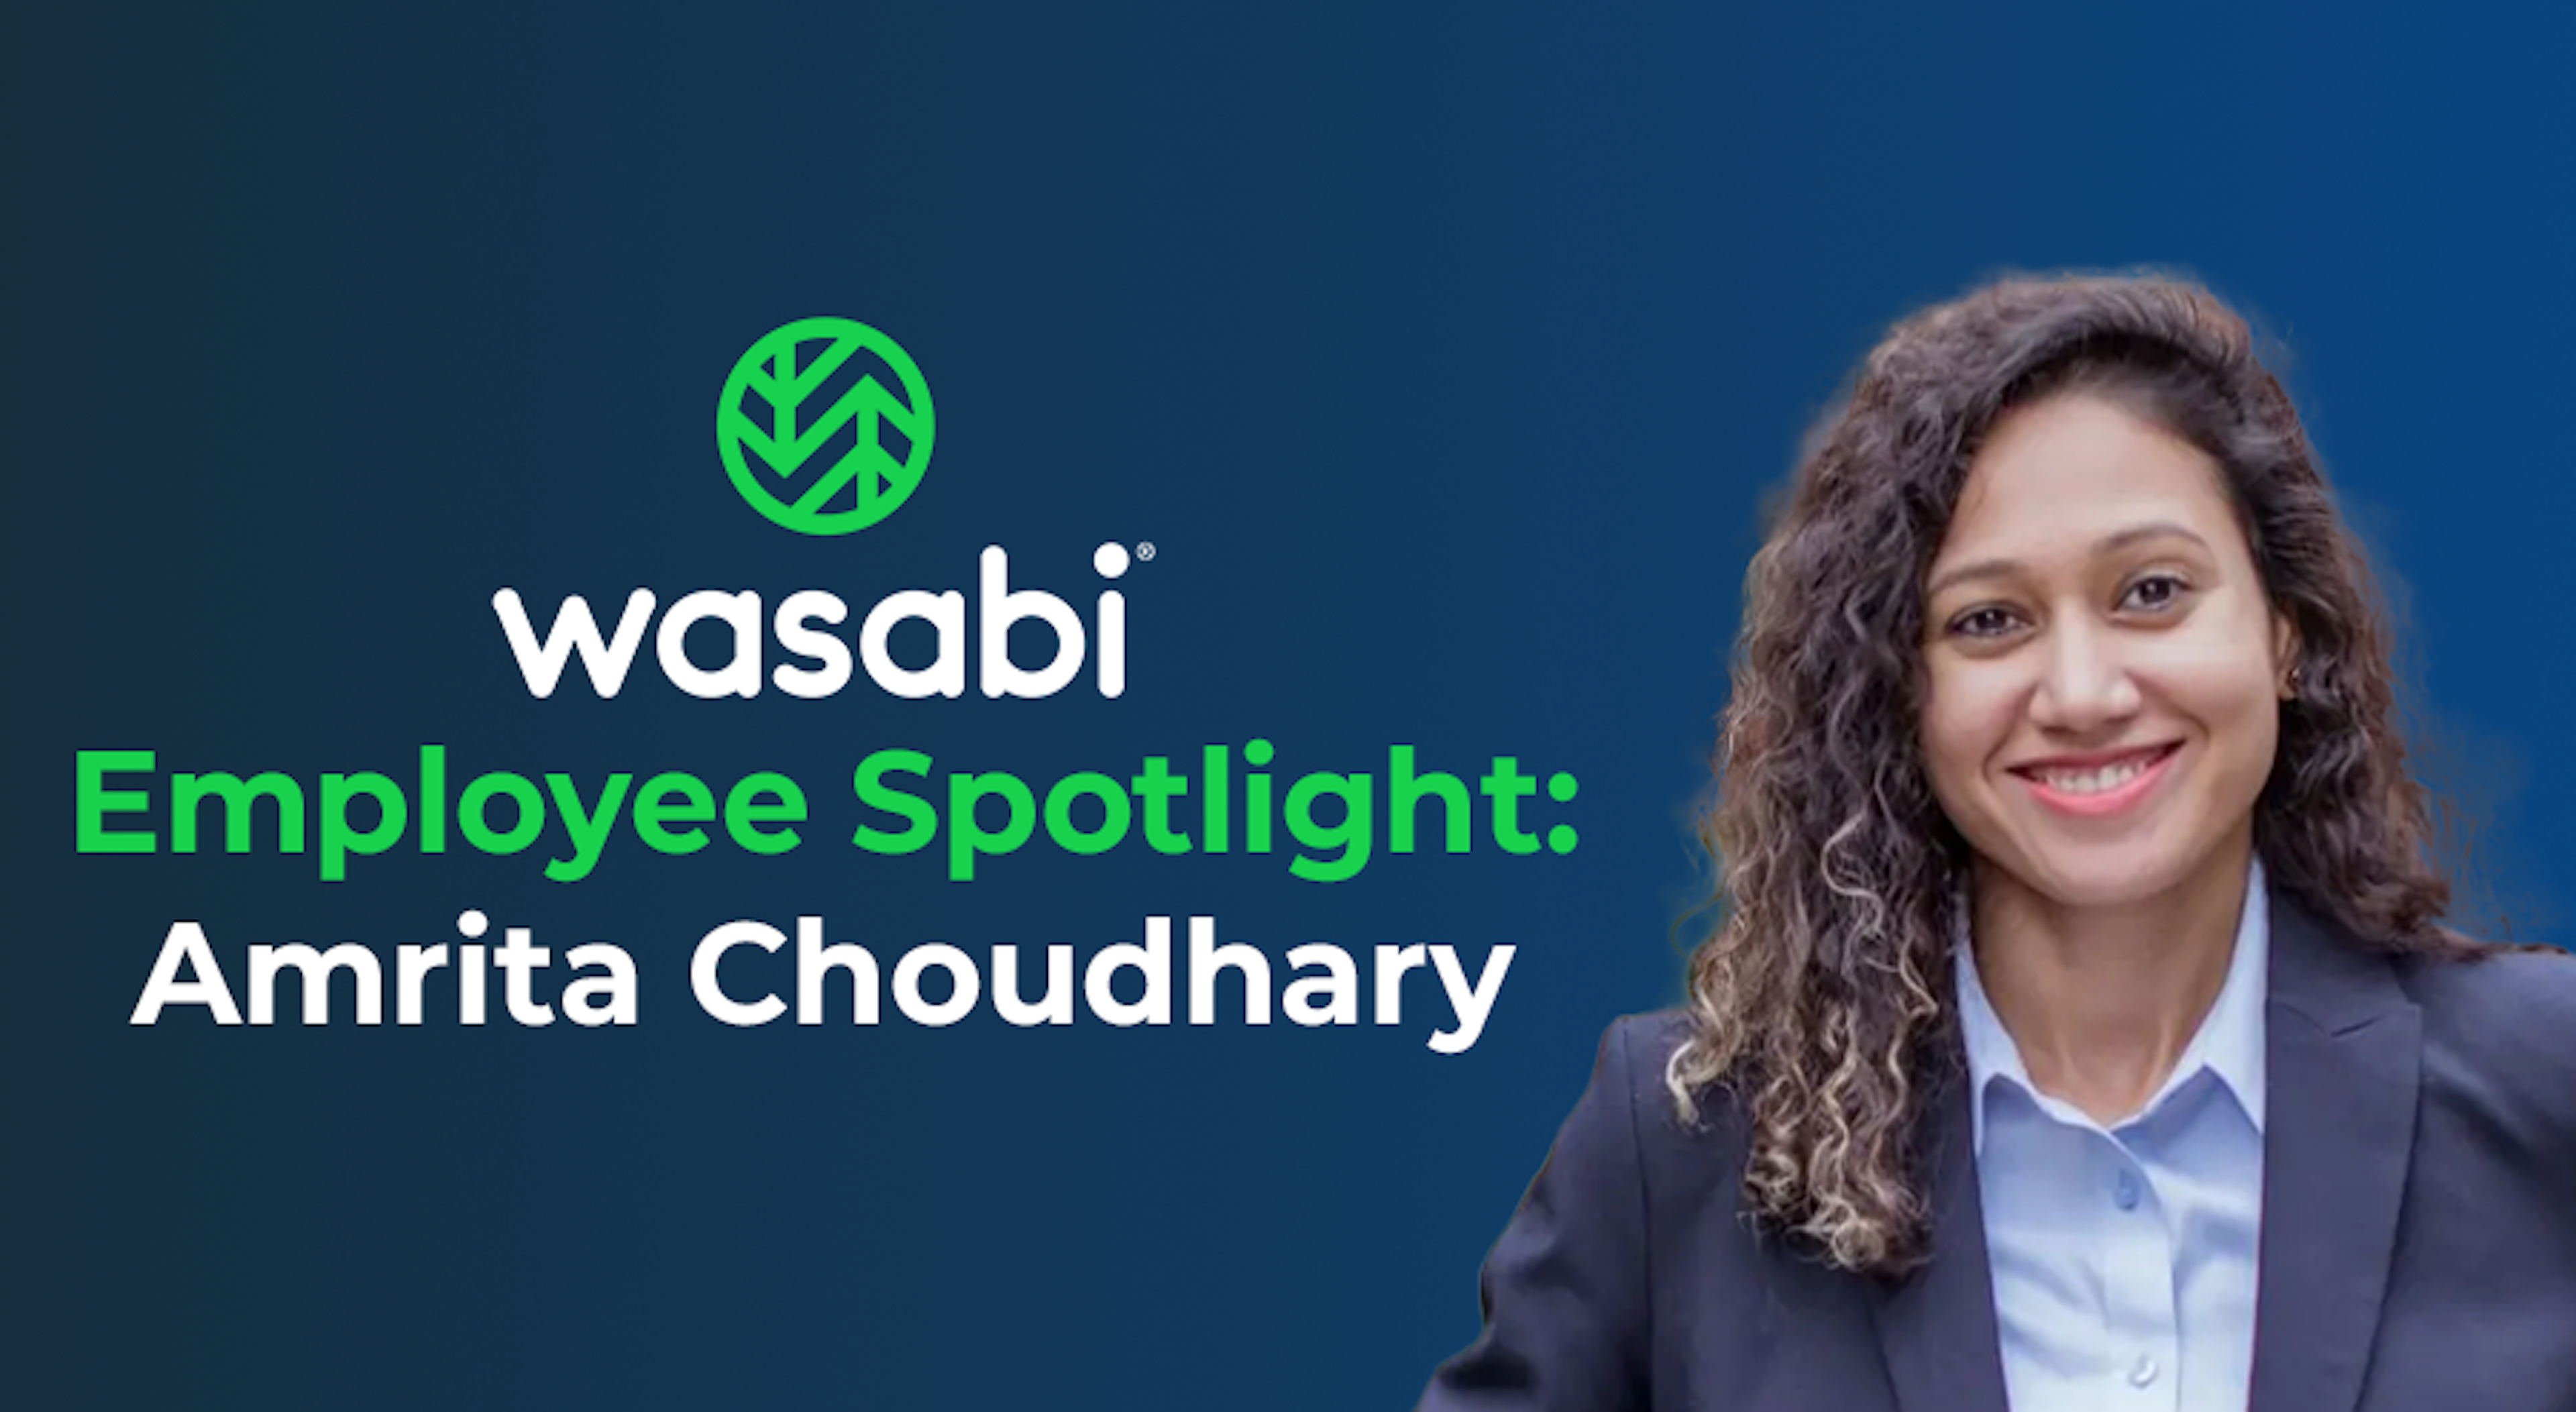 Wasabi Employee Spotlight: Amrita Choudhary